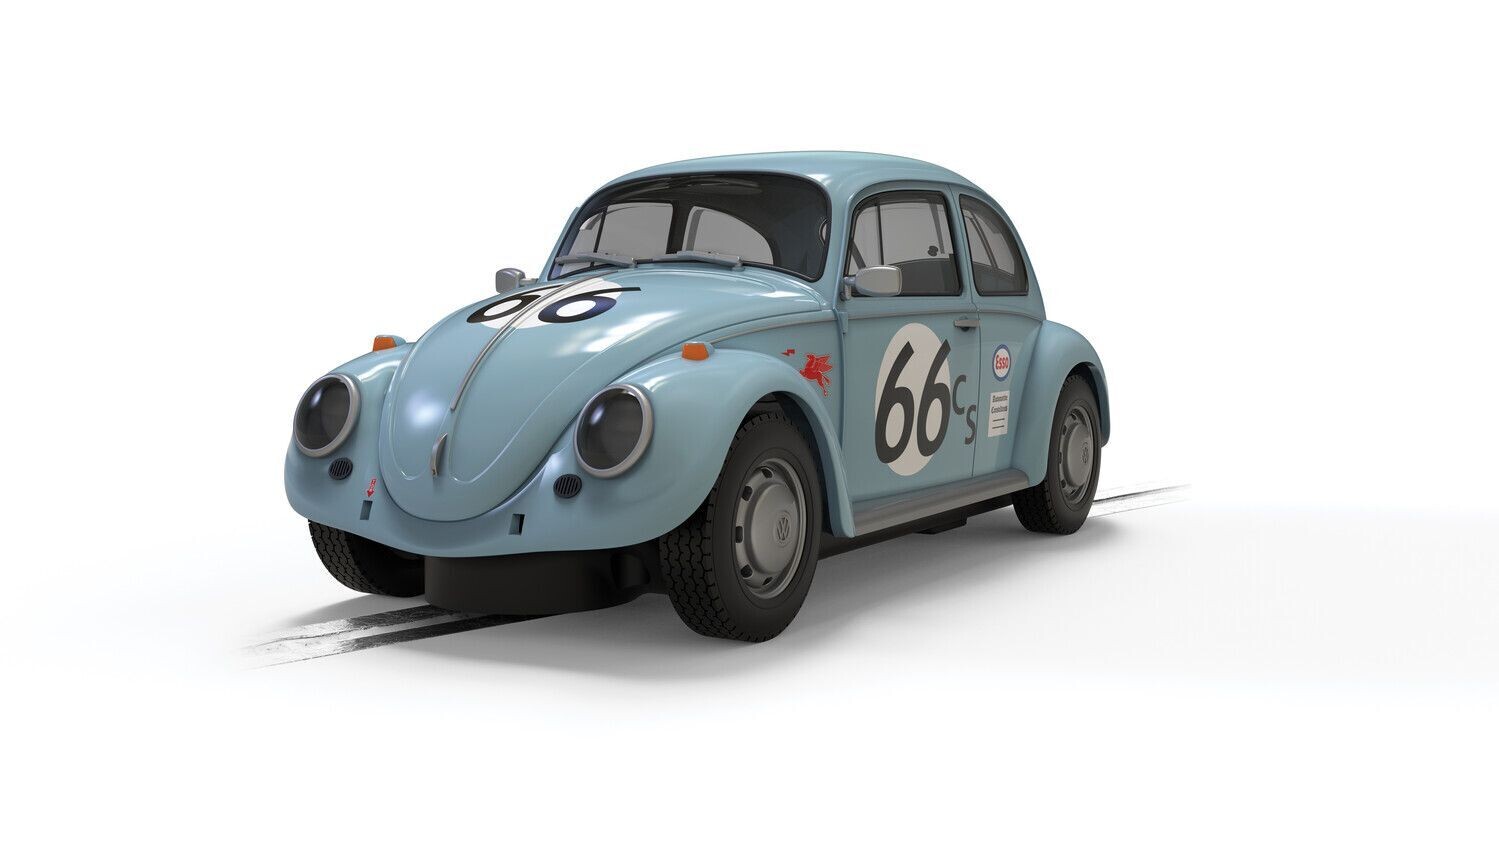 Scalextric C4498 Volkswagen Beetle - Blue 66 Slot Car